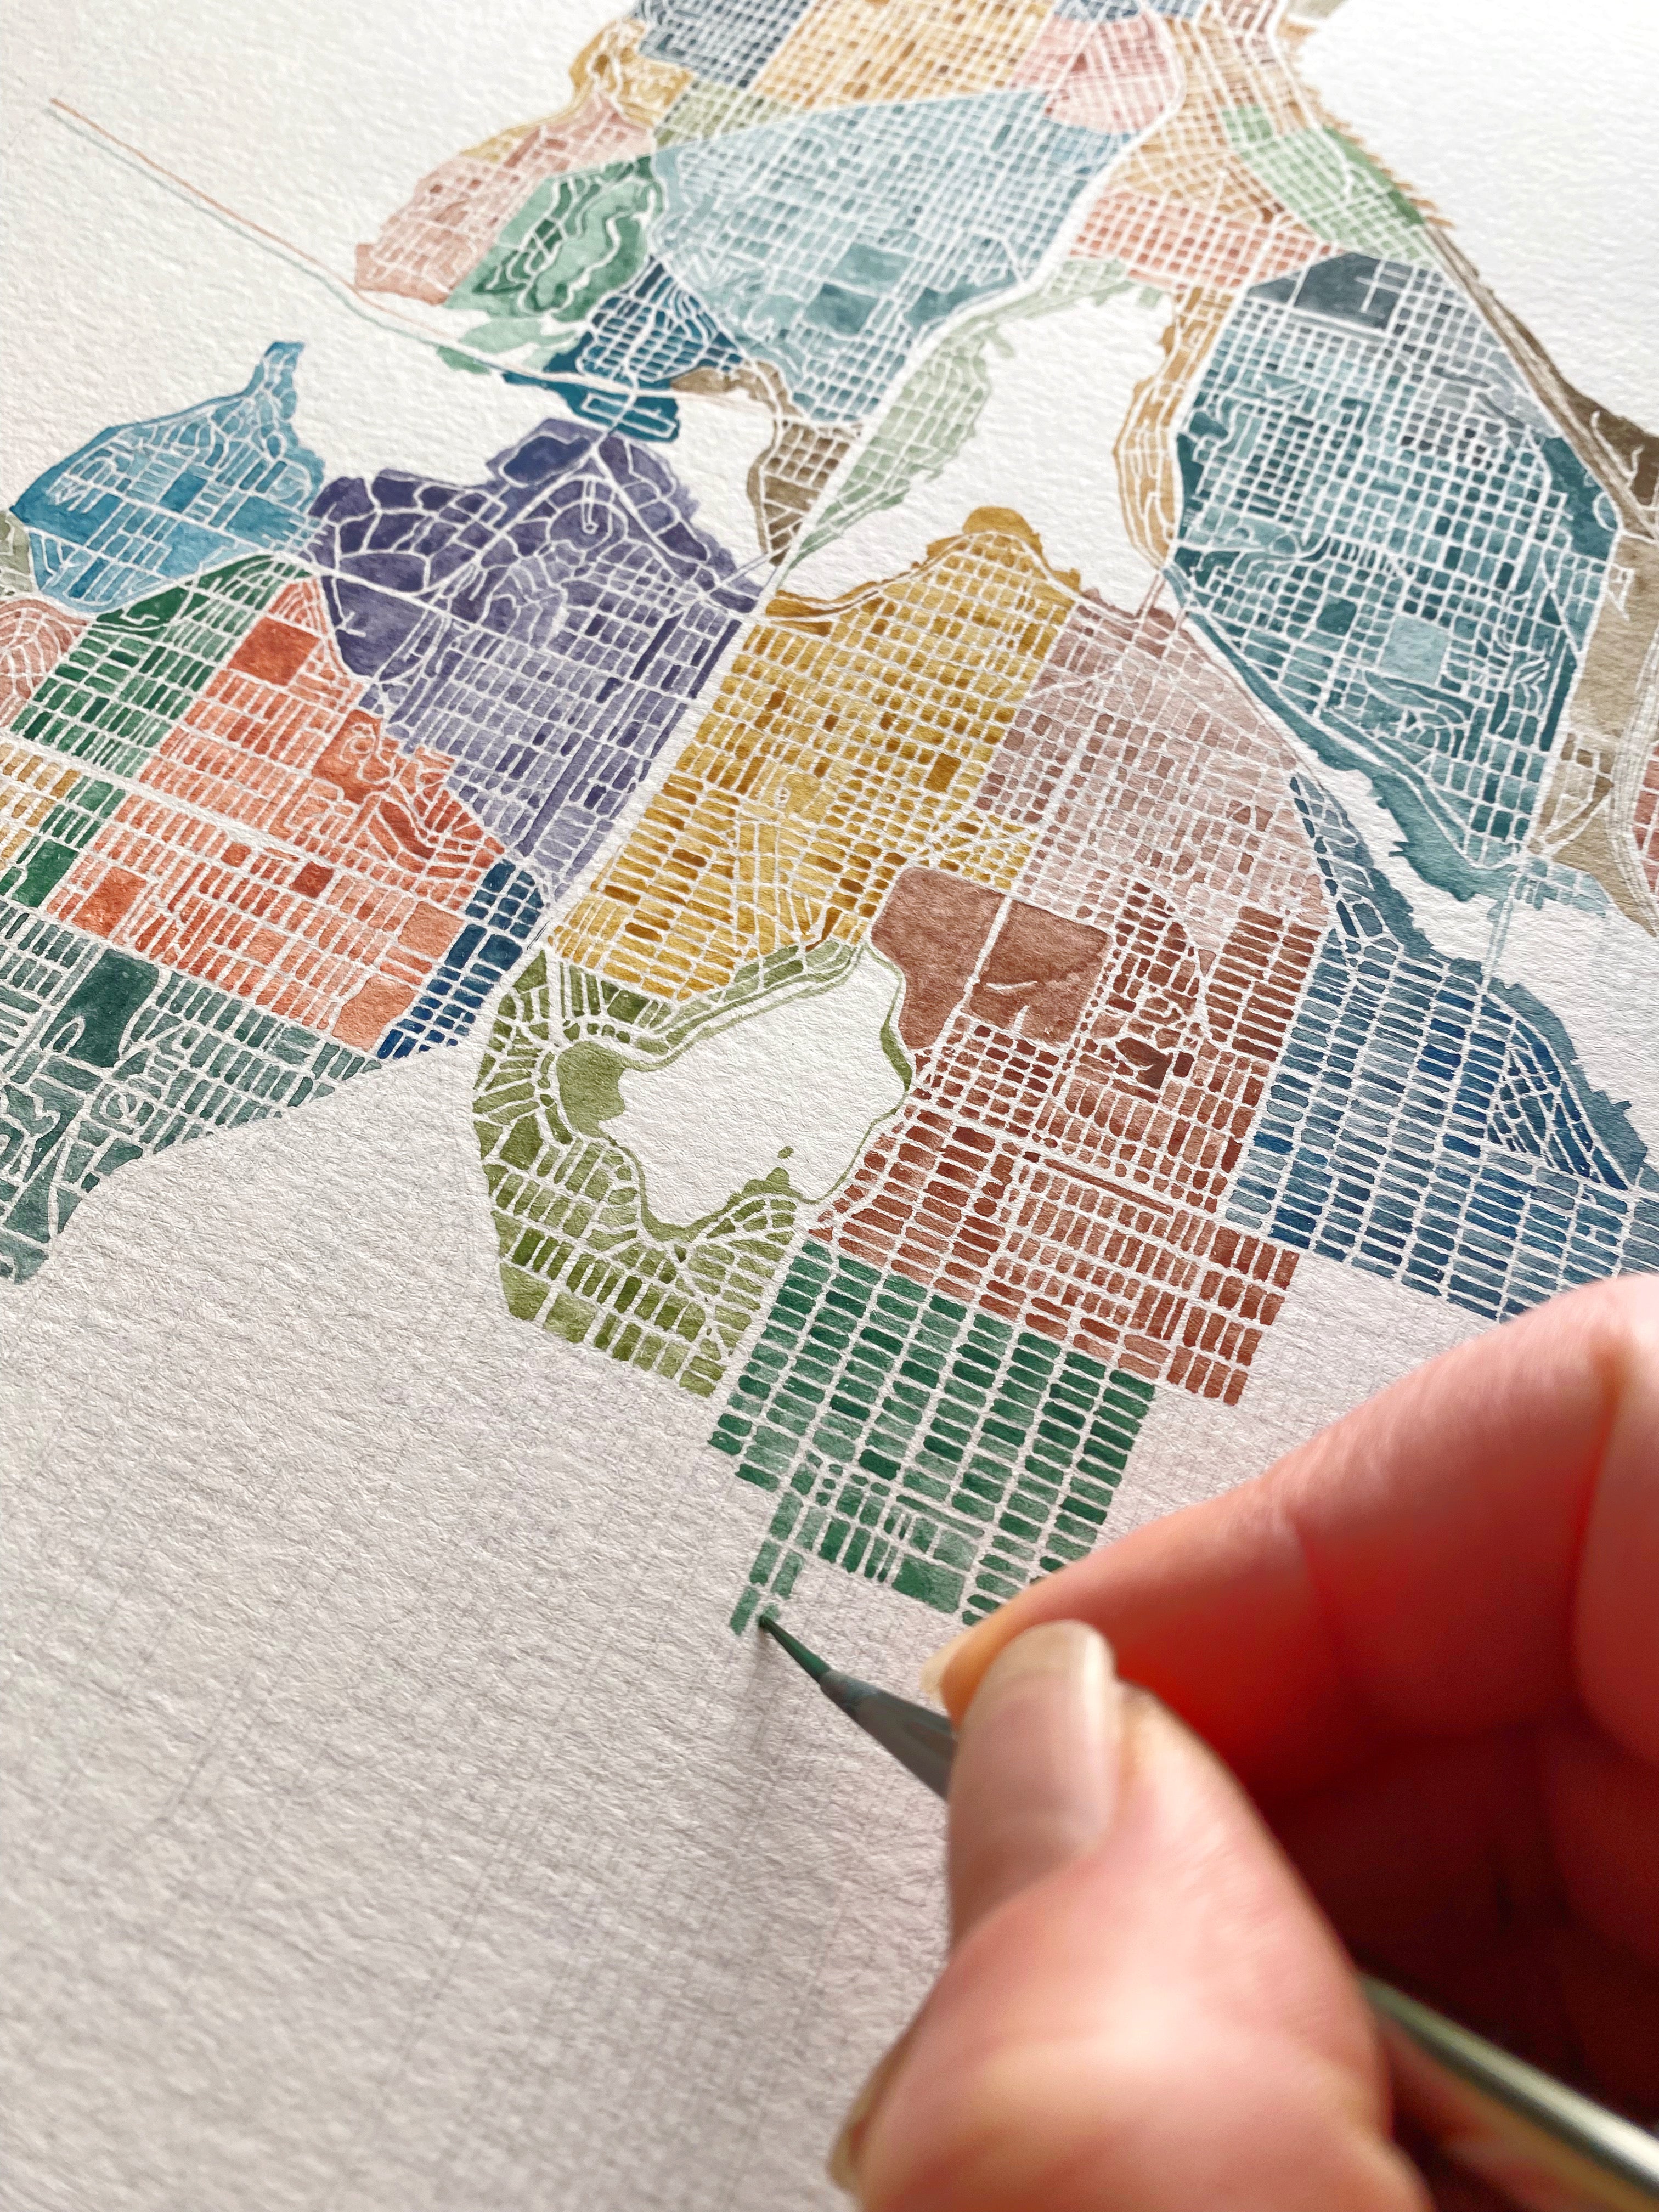 SEATTLE Neighborhoods Watercolor City Blocks Map: PRINT